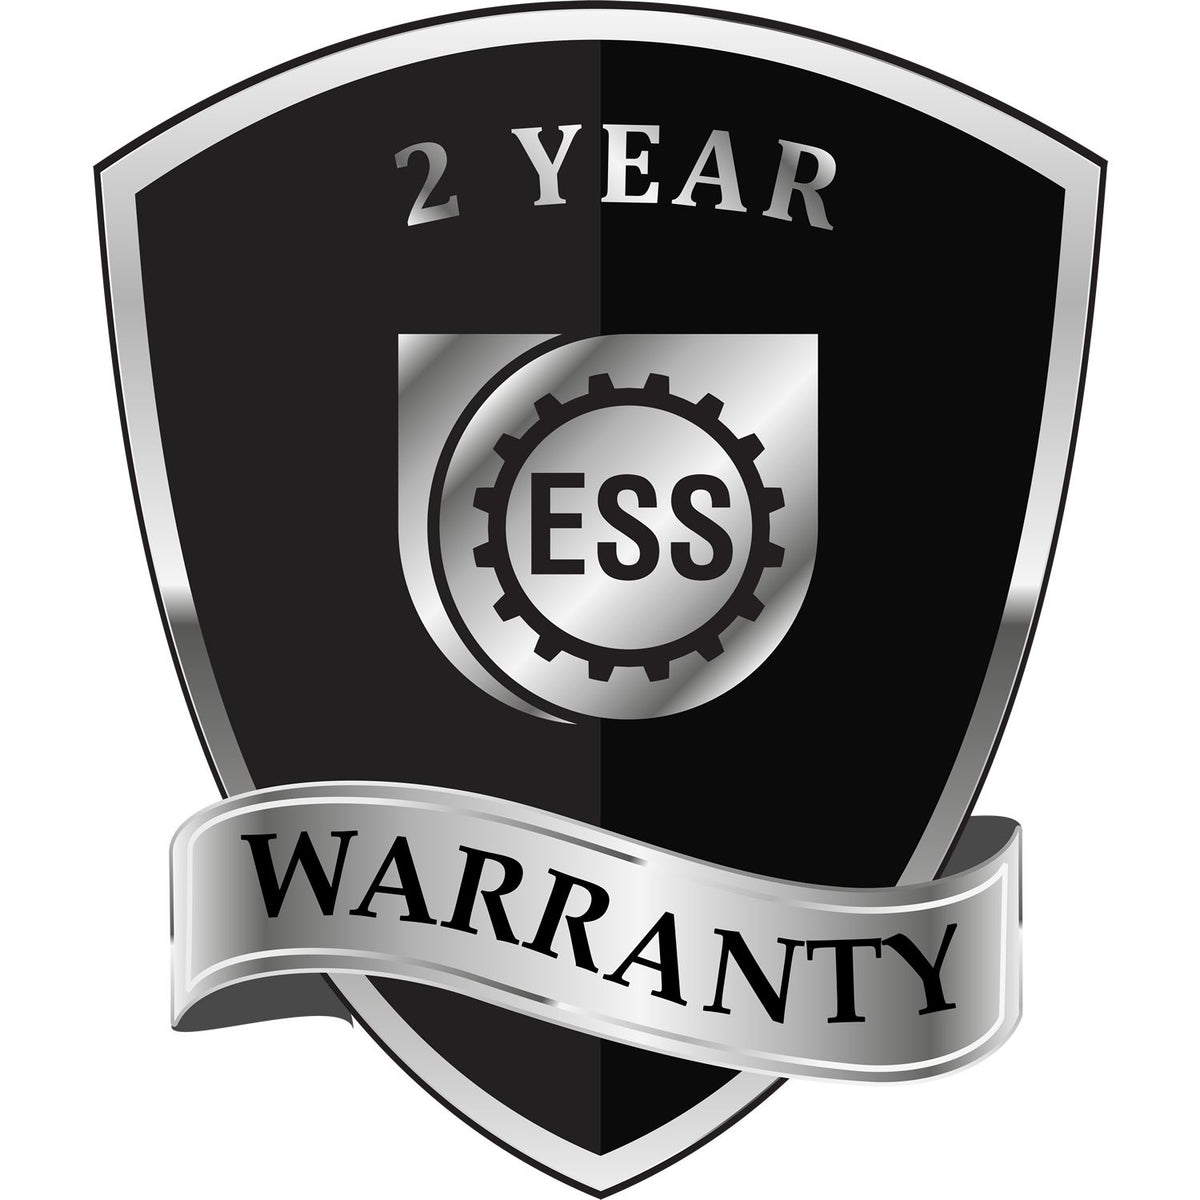 A black and silver badge or emblem showing warranty information for the Handheld Missouri Professional Geologist Embosser